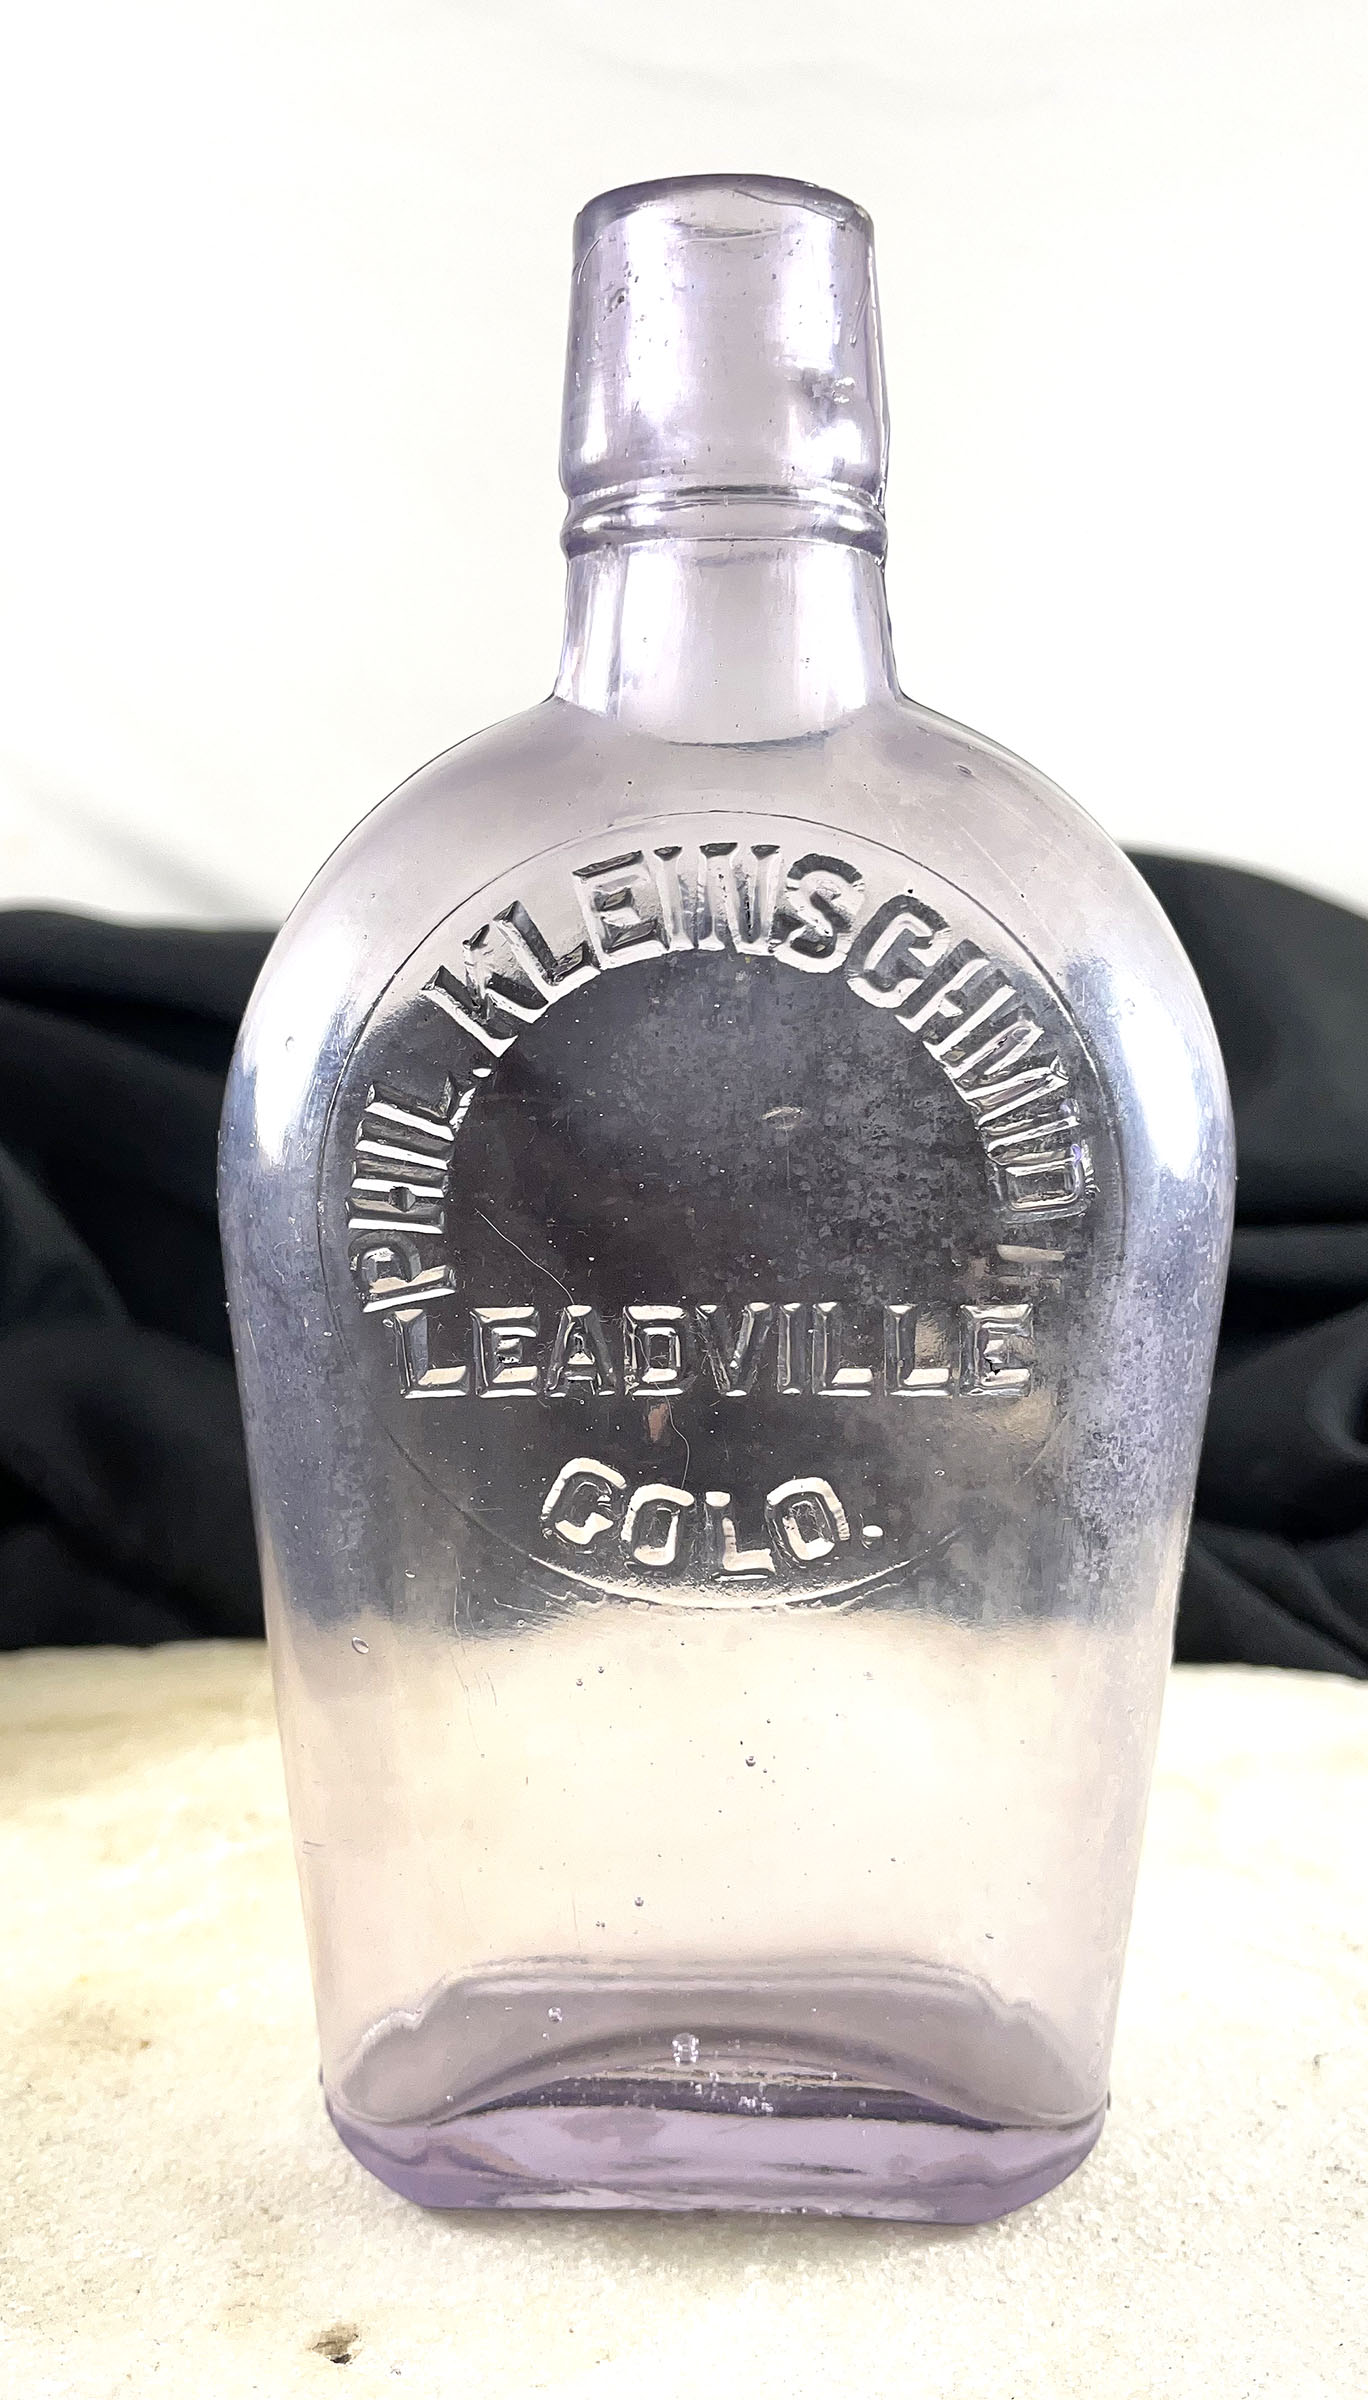 PHIL KLEINSCHMIDT, LEADVILLE, COLORADO pint whiskey bottle, 1900